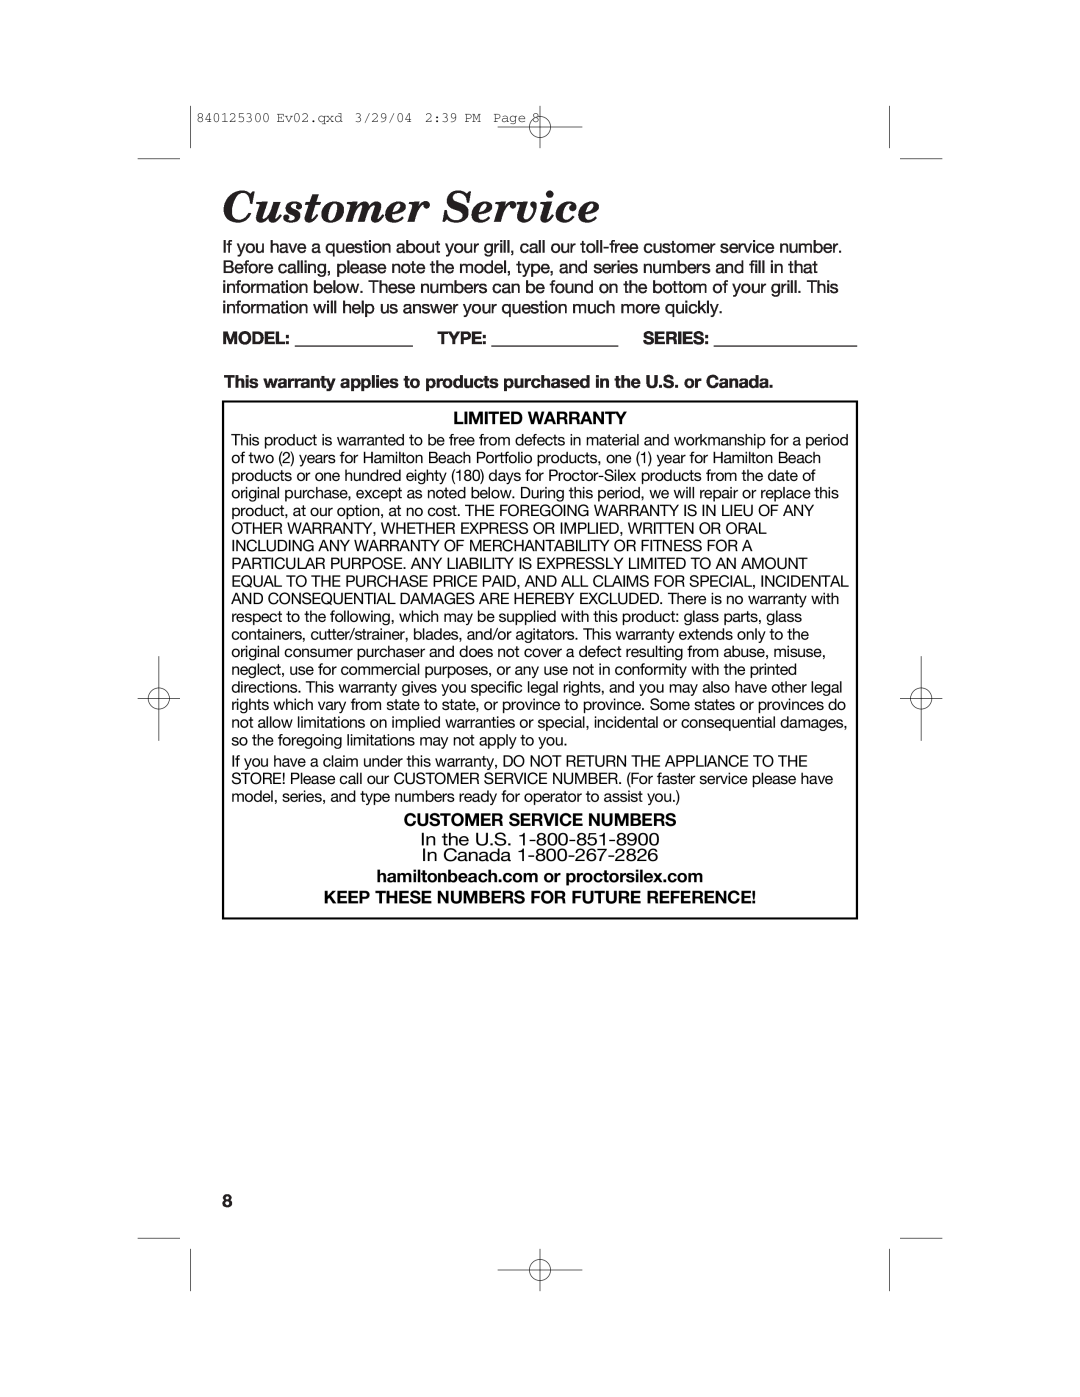 Hamilton Beach 25295 manual Model Type Series, Limited Warranty, Customer Service Numbers 